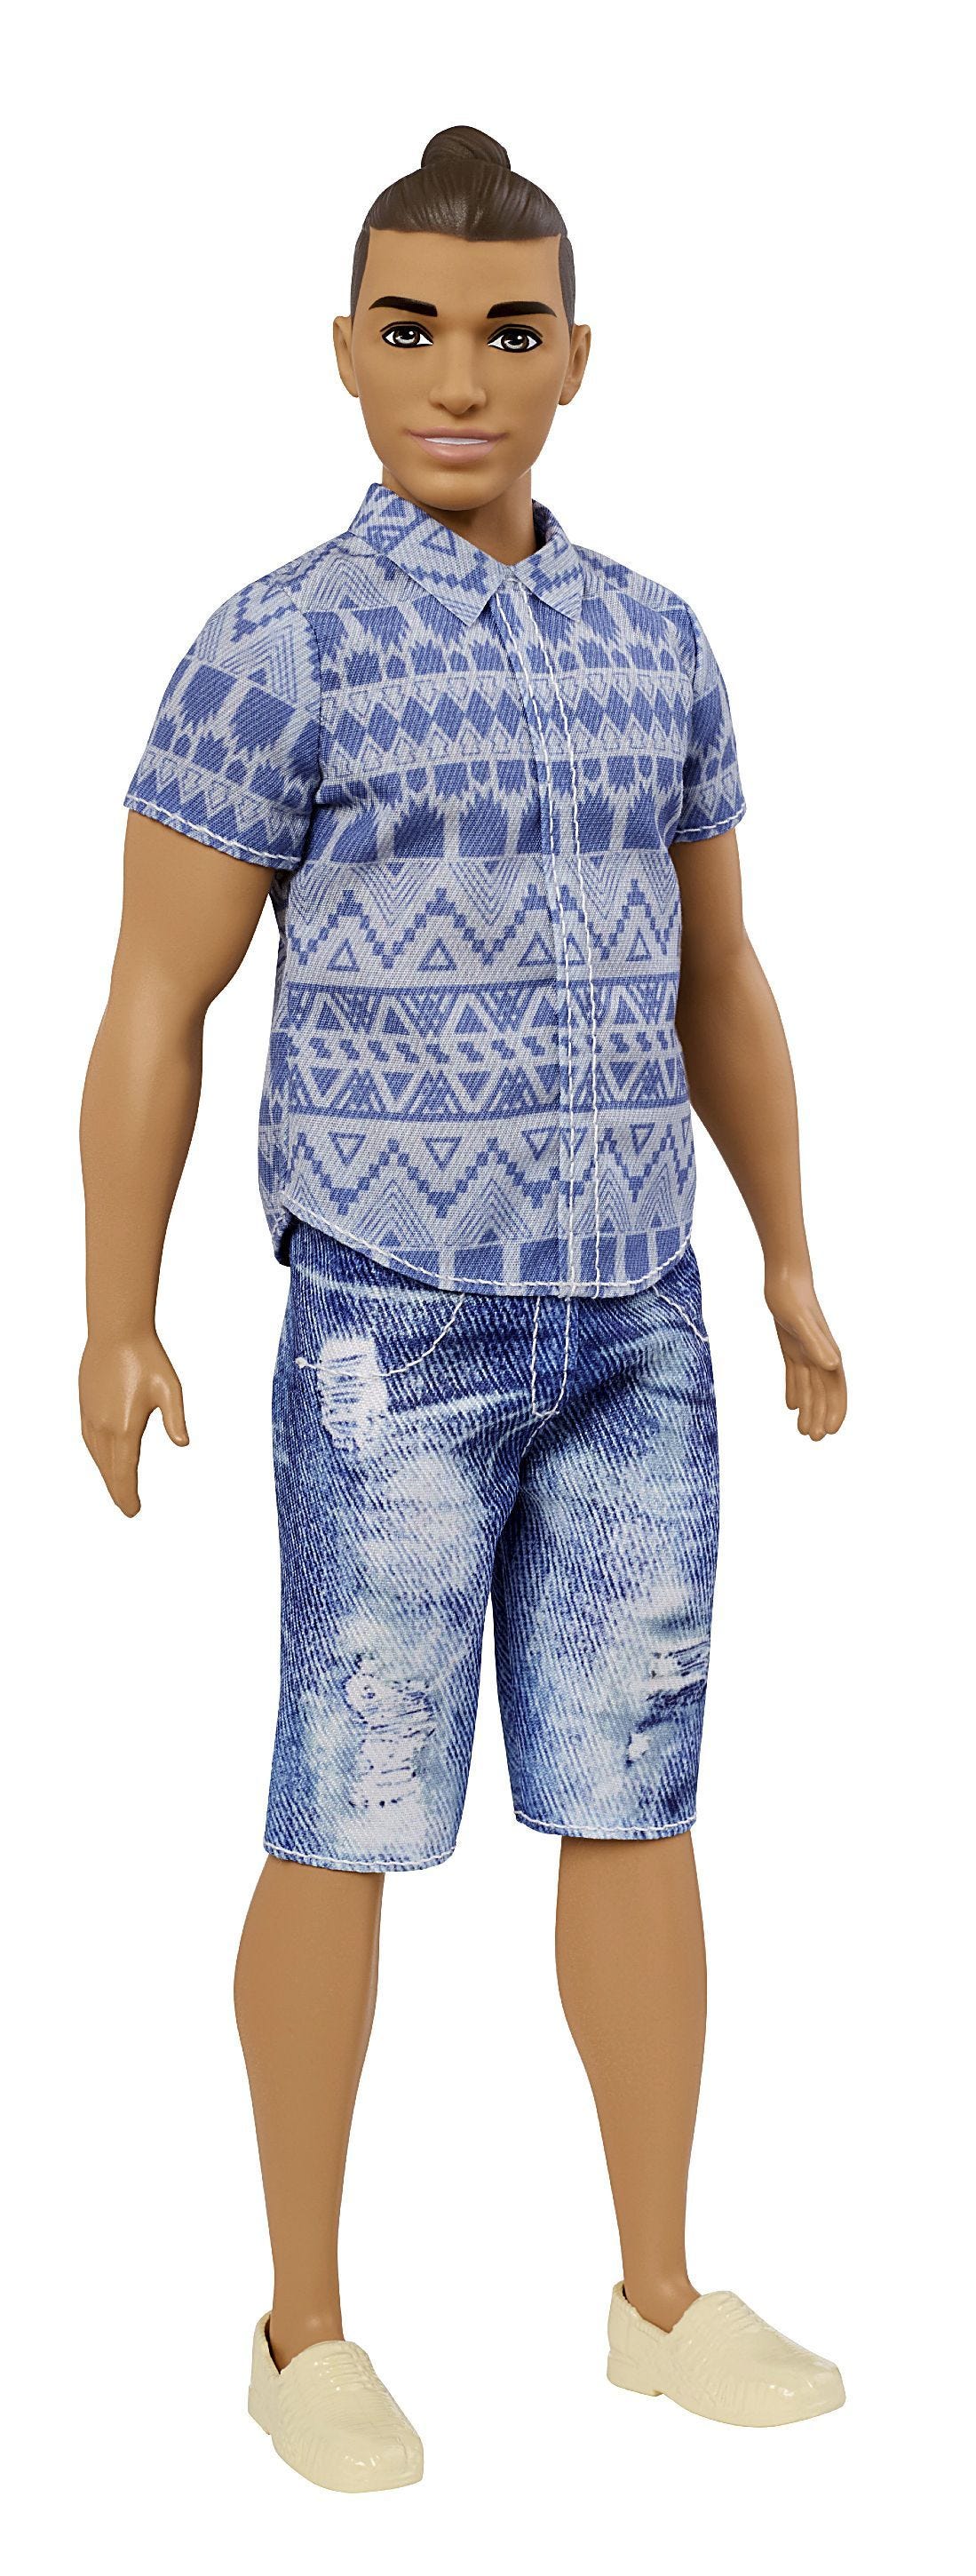 Barbie's boyfriend Ken gets a makeover: Cornrows, man buns and new skin tones